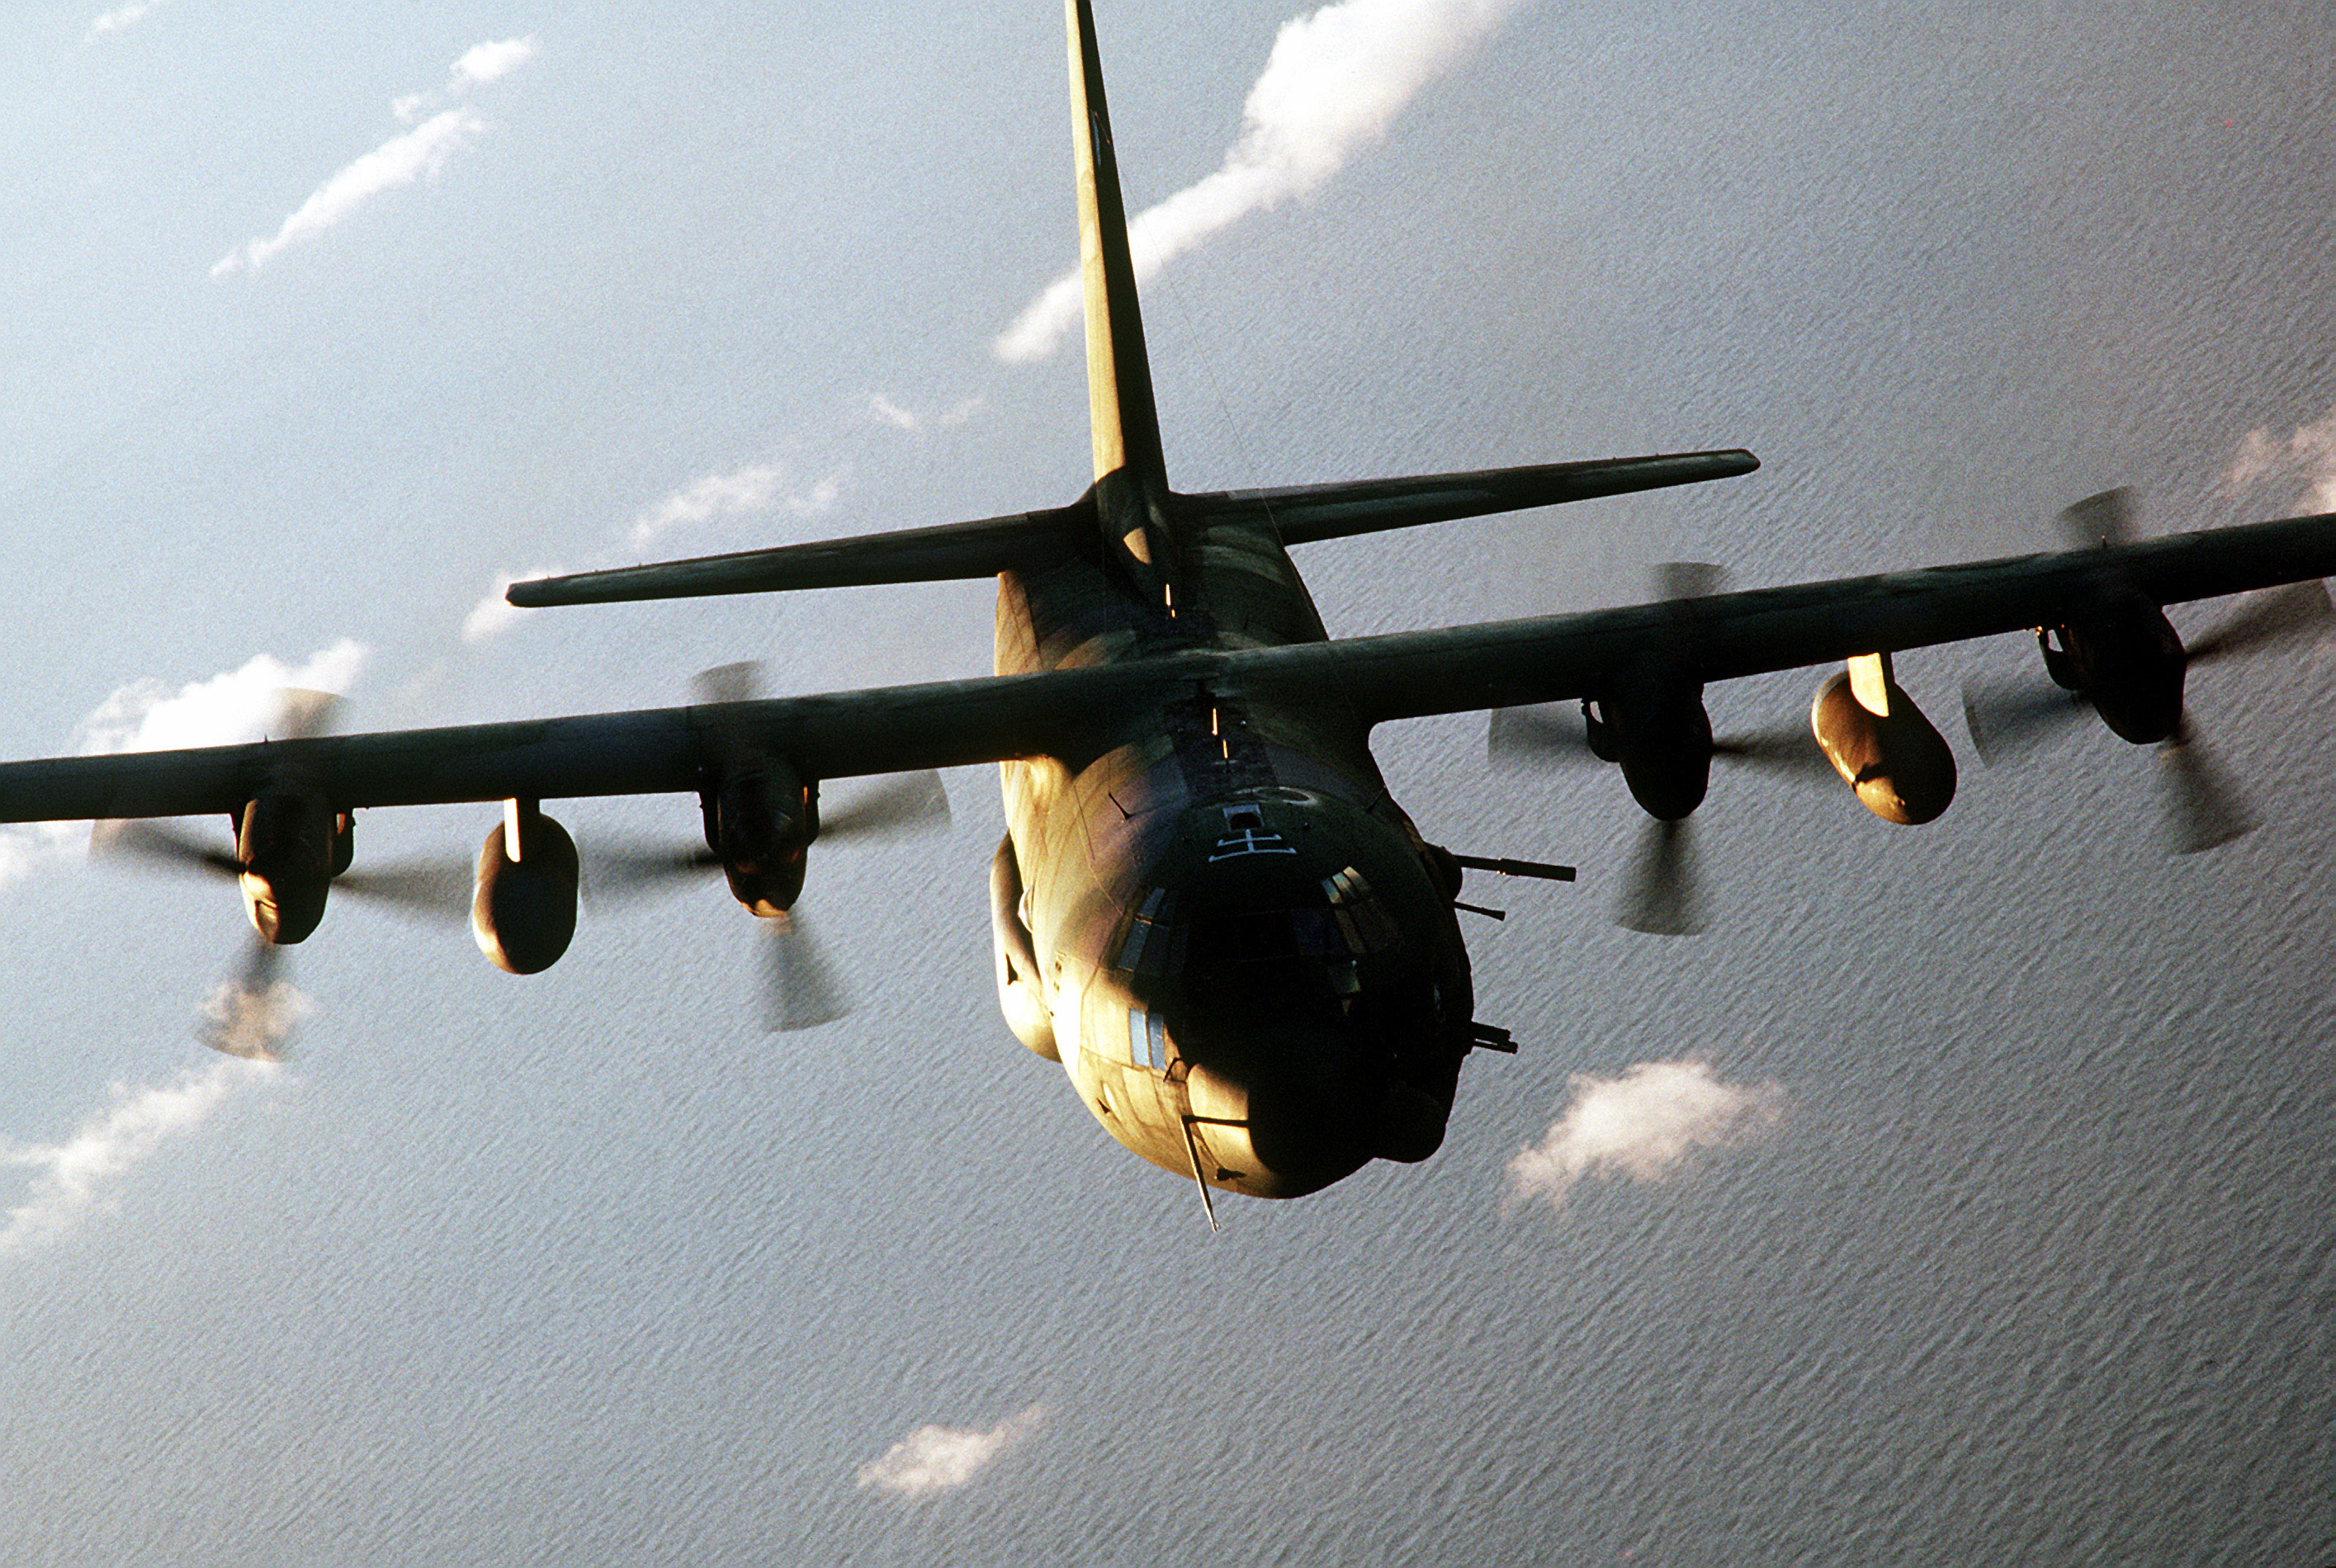 AC-130 Spectre Gunship - USAF Special Operations Photo